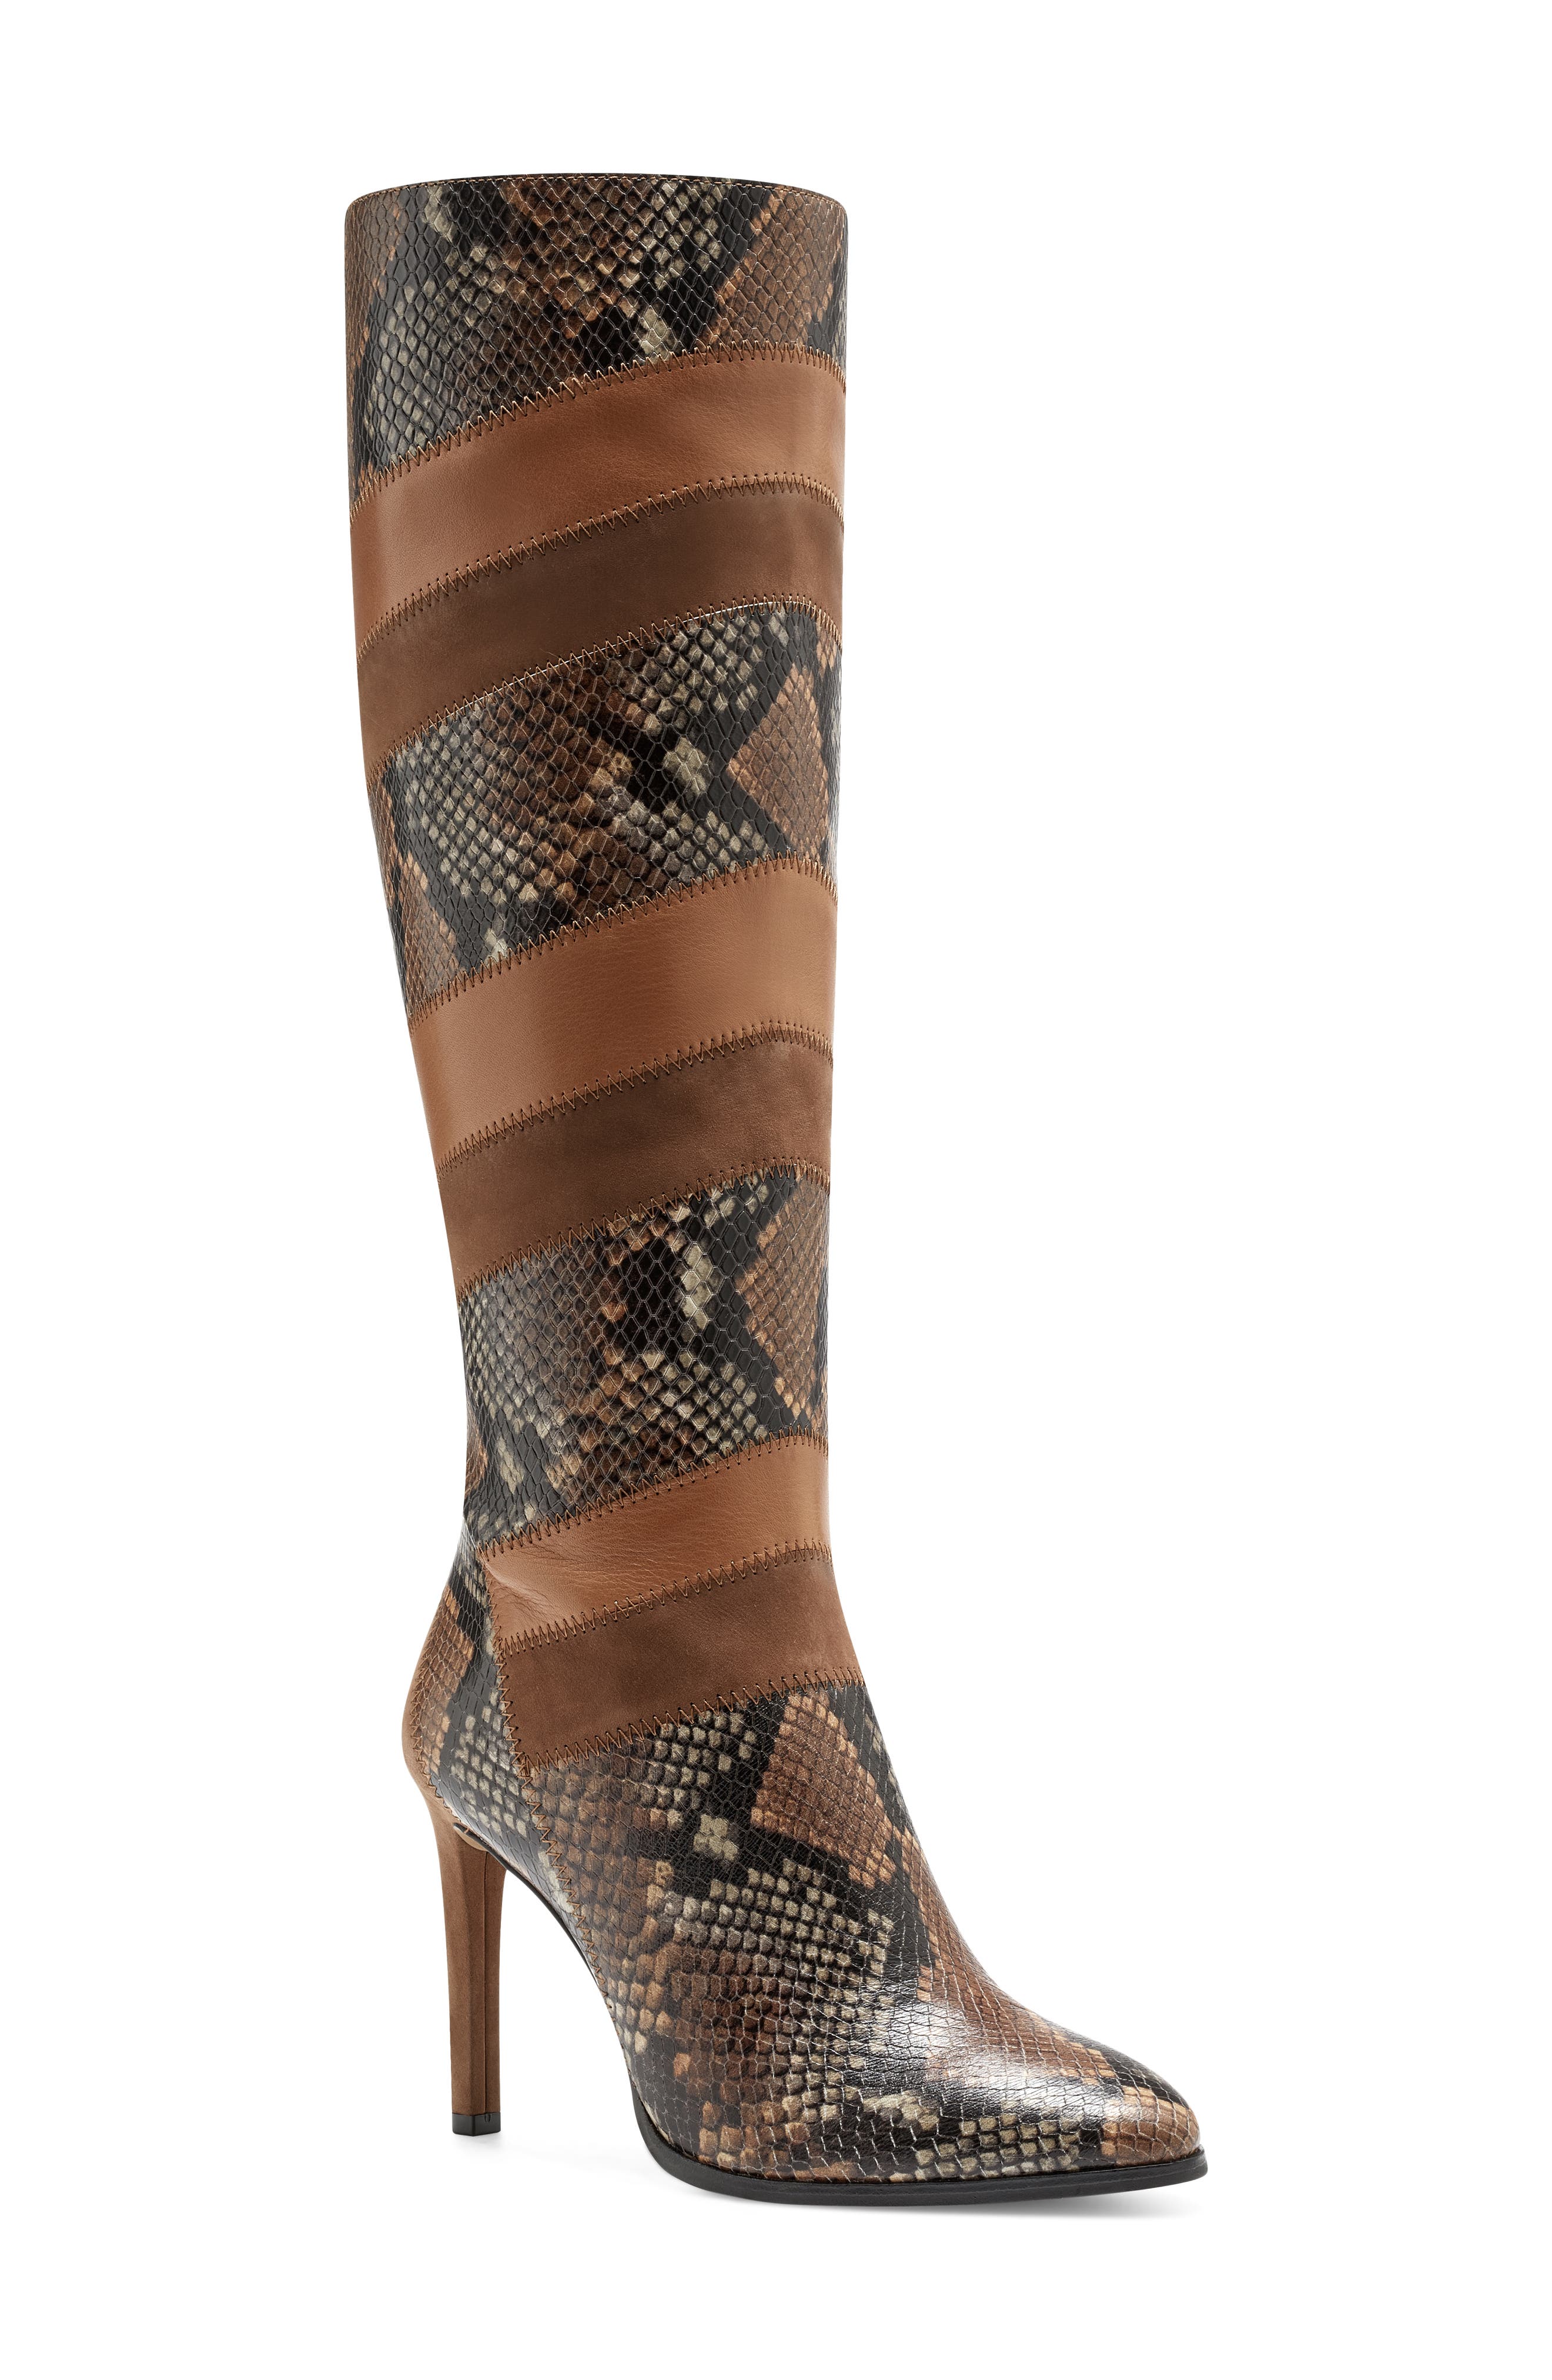 UPC 194307360667 product image for Women's Vince Camuto Saraalan Knee High Boot, Size 7.5 M - Brown | upcitemdb.com